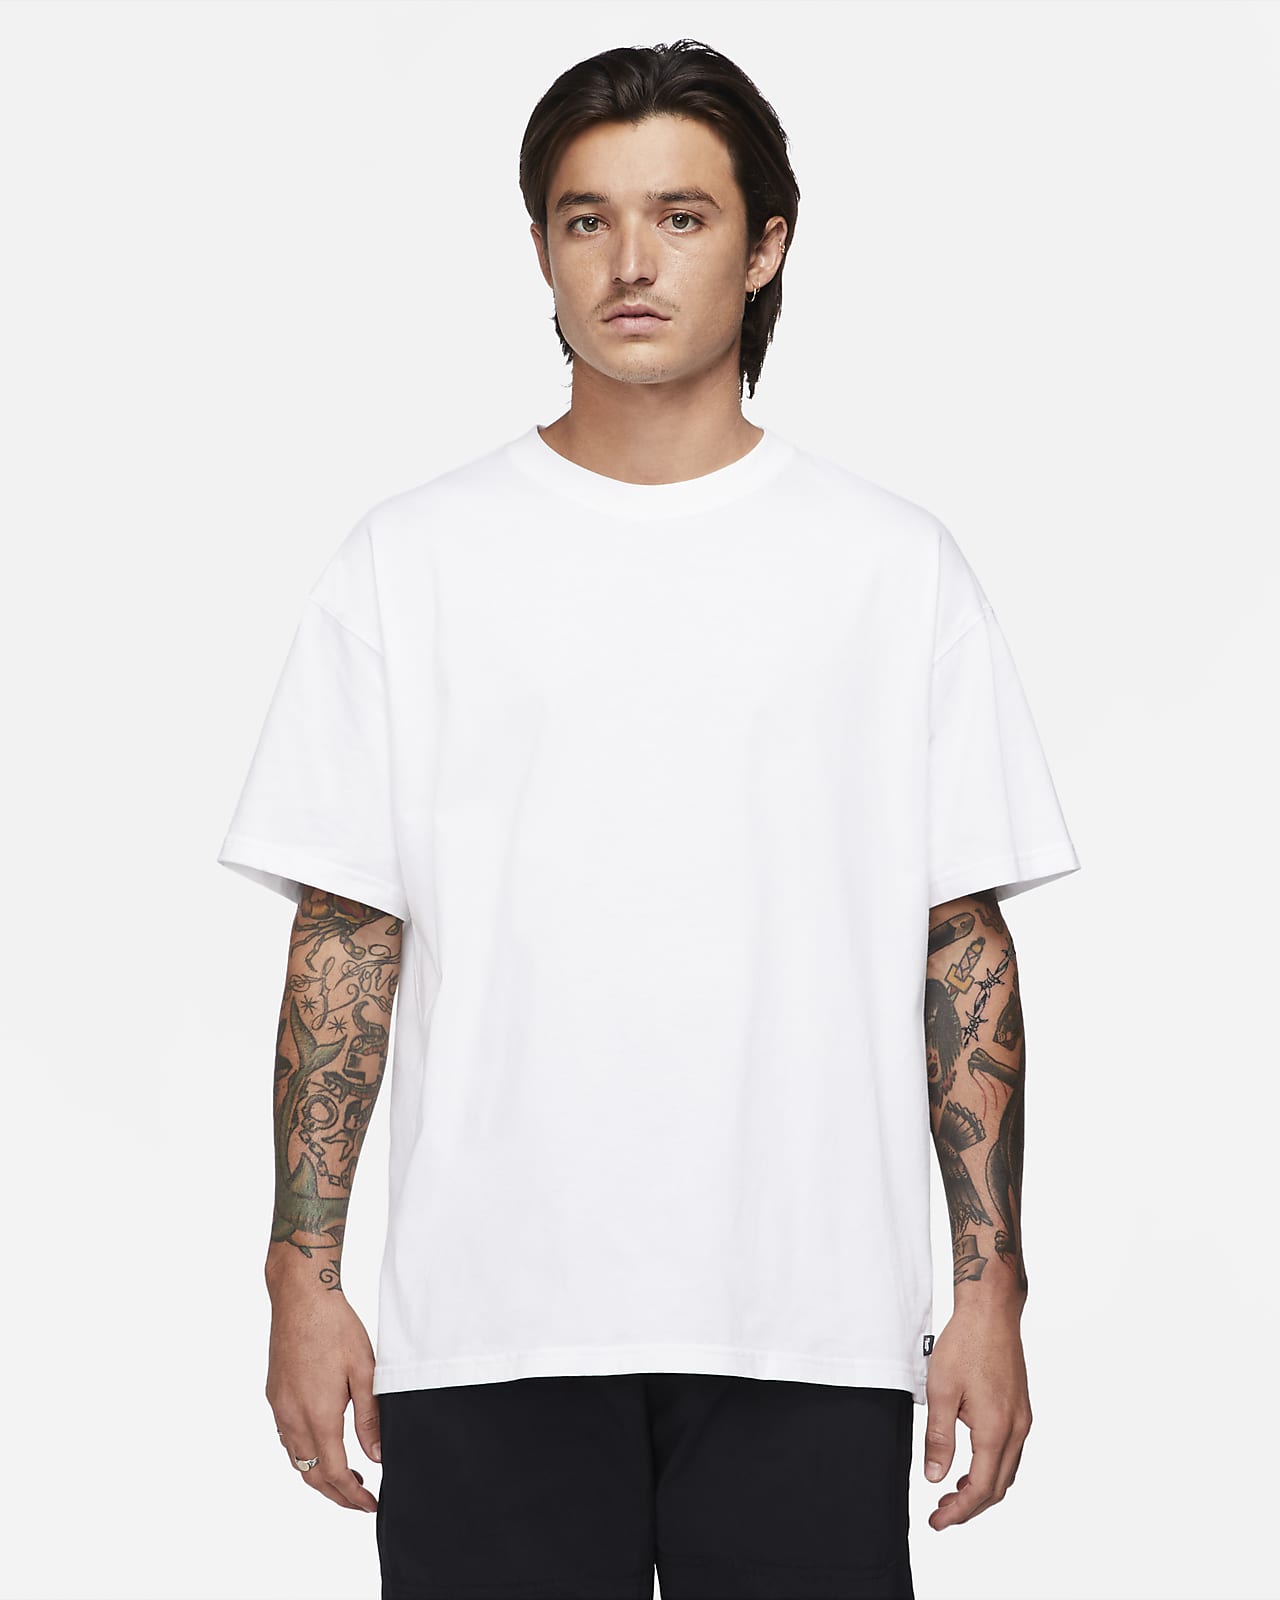 Tee-shirt de skateboard Nike SB